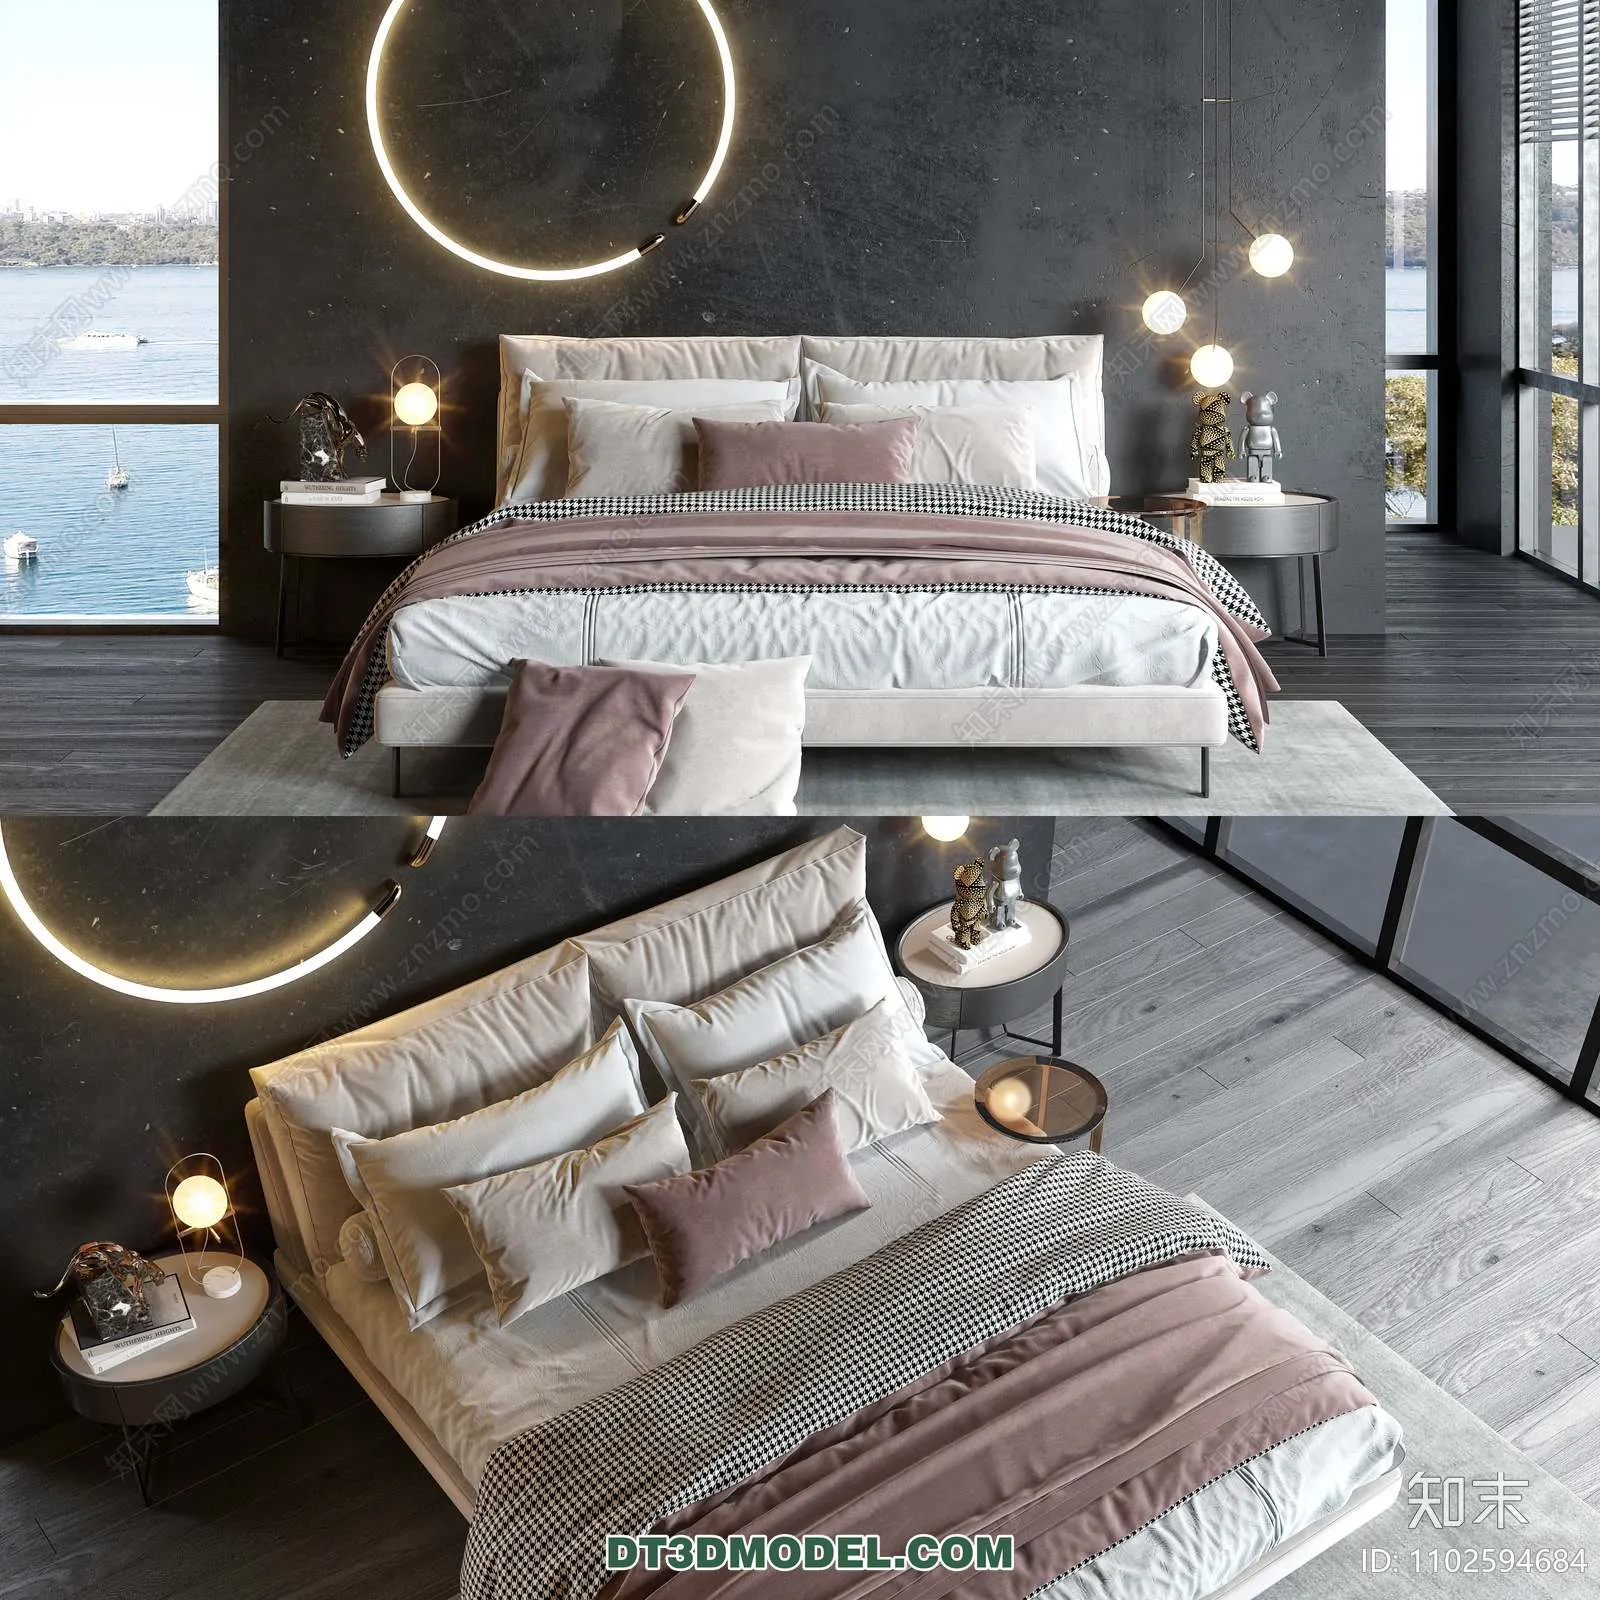 Double Bed 3D Models – 0008